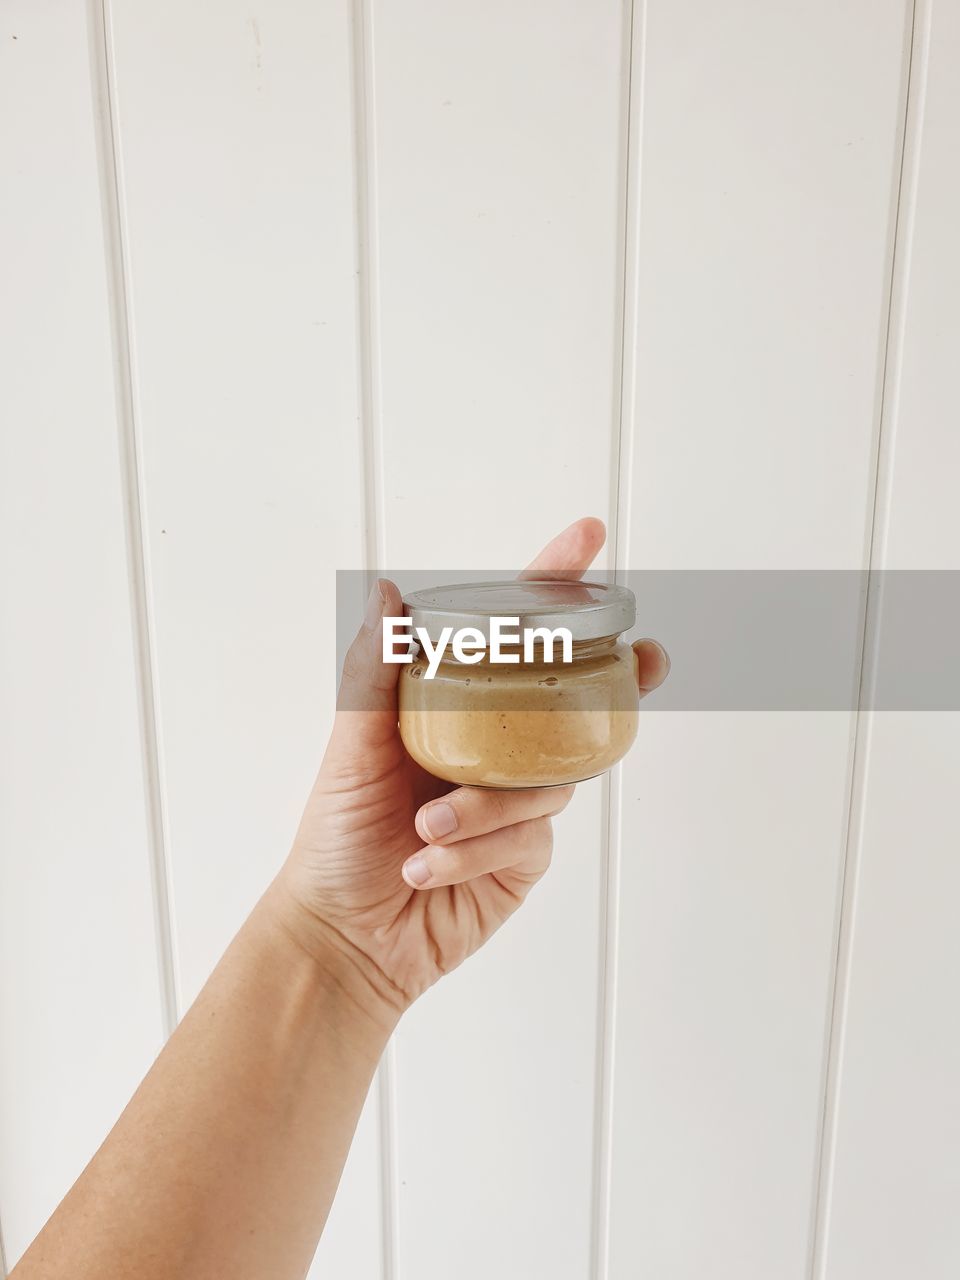 A hand holding a glass of homemade peanut butter